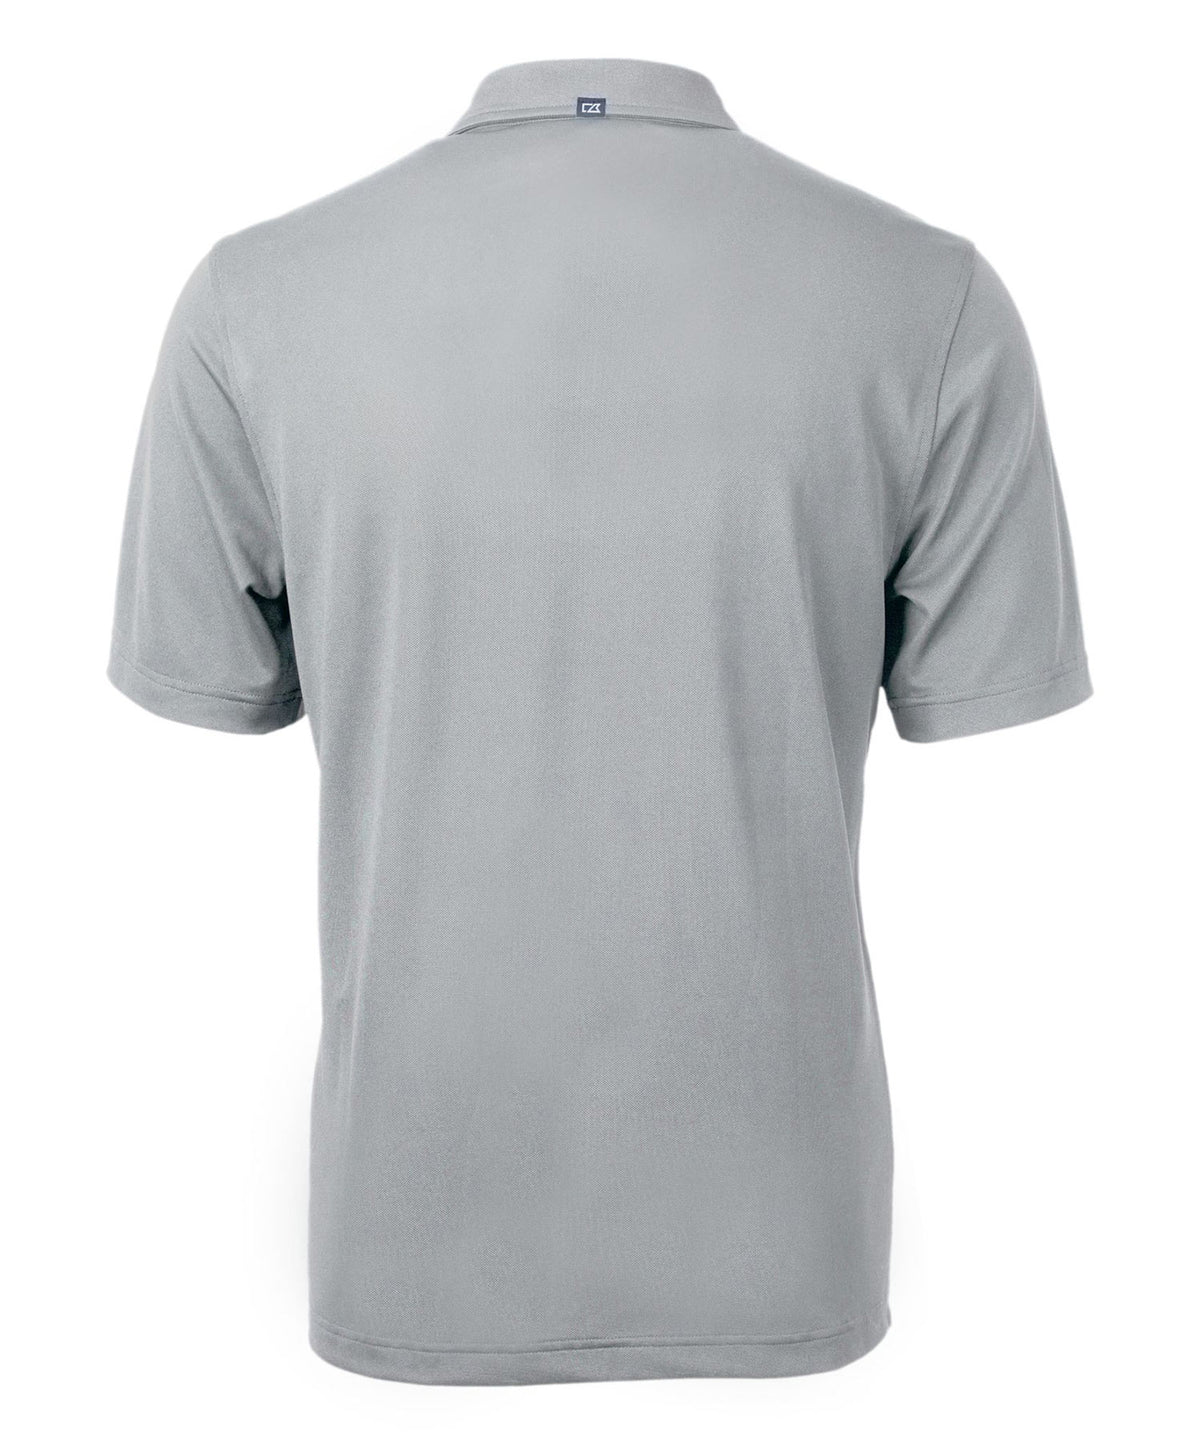 Cutter & Buck Atlanta Falcons Short Sleeve Polo Knit Shirt, Men's Big & Tall